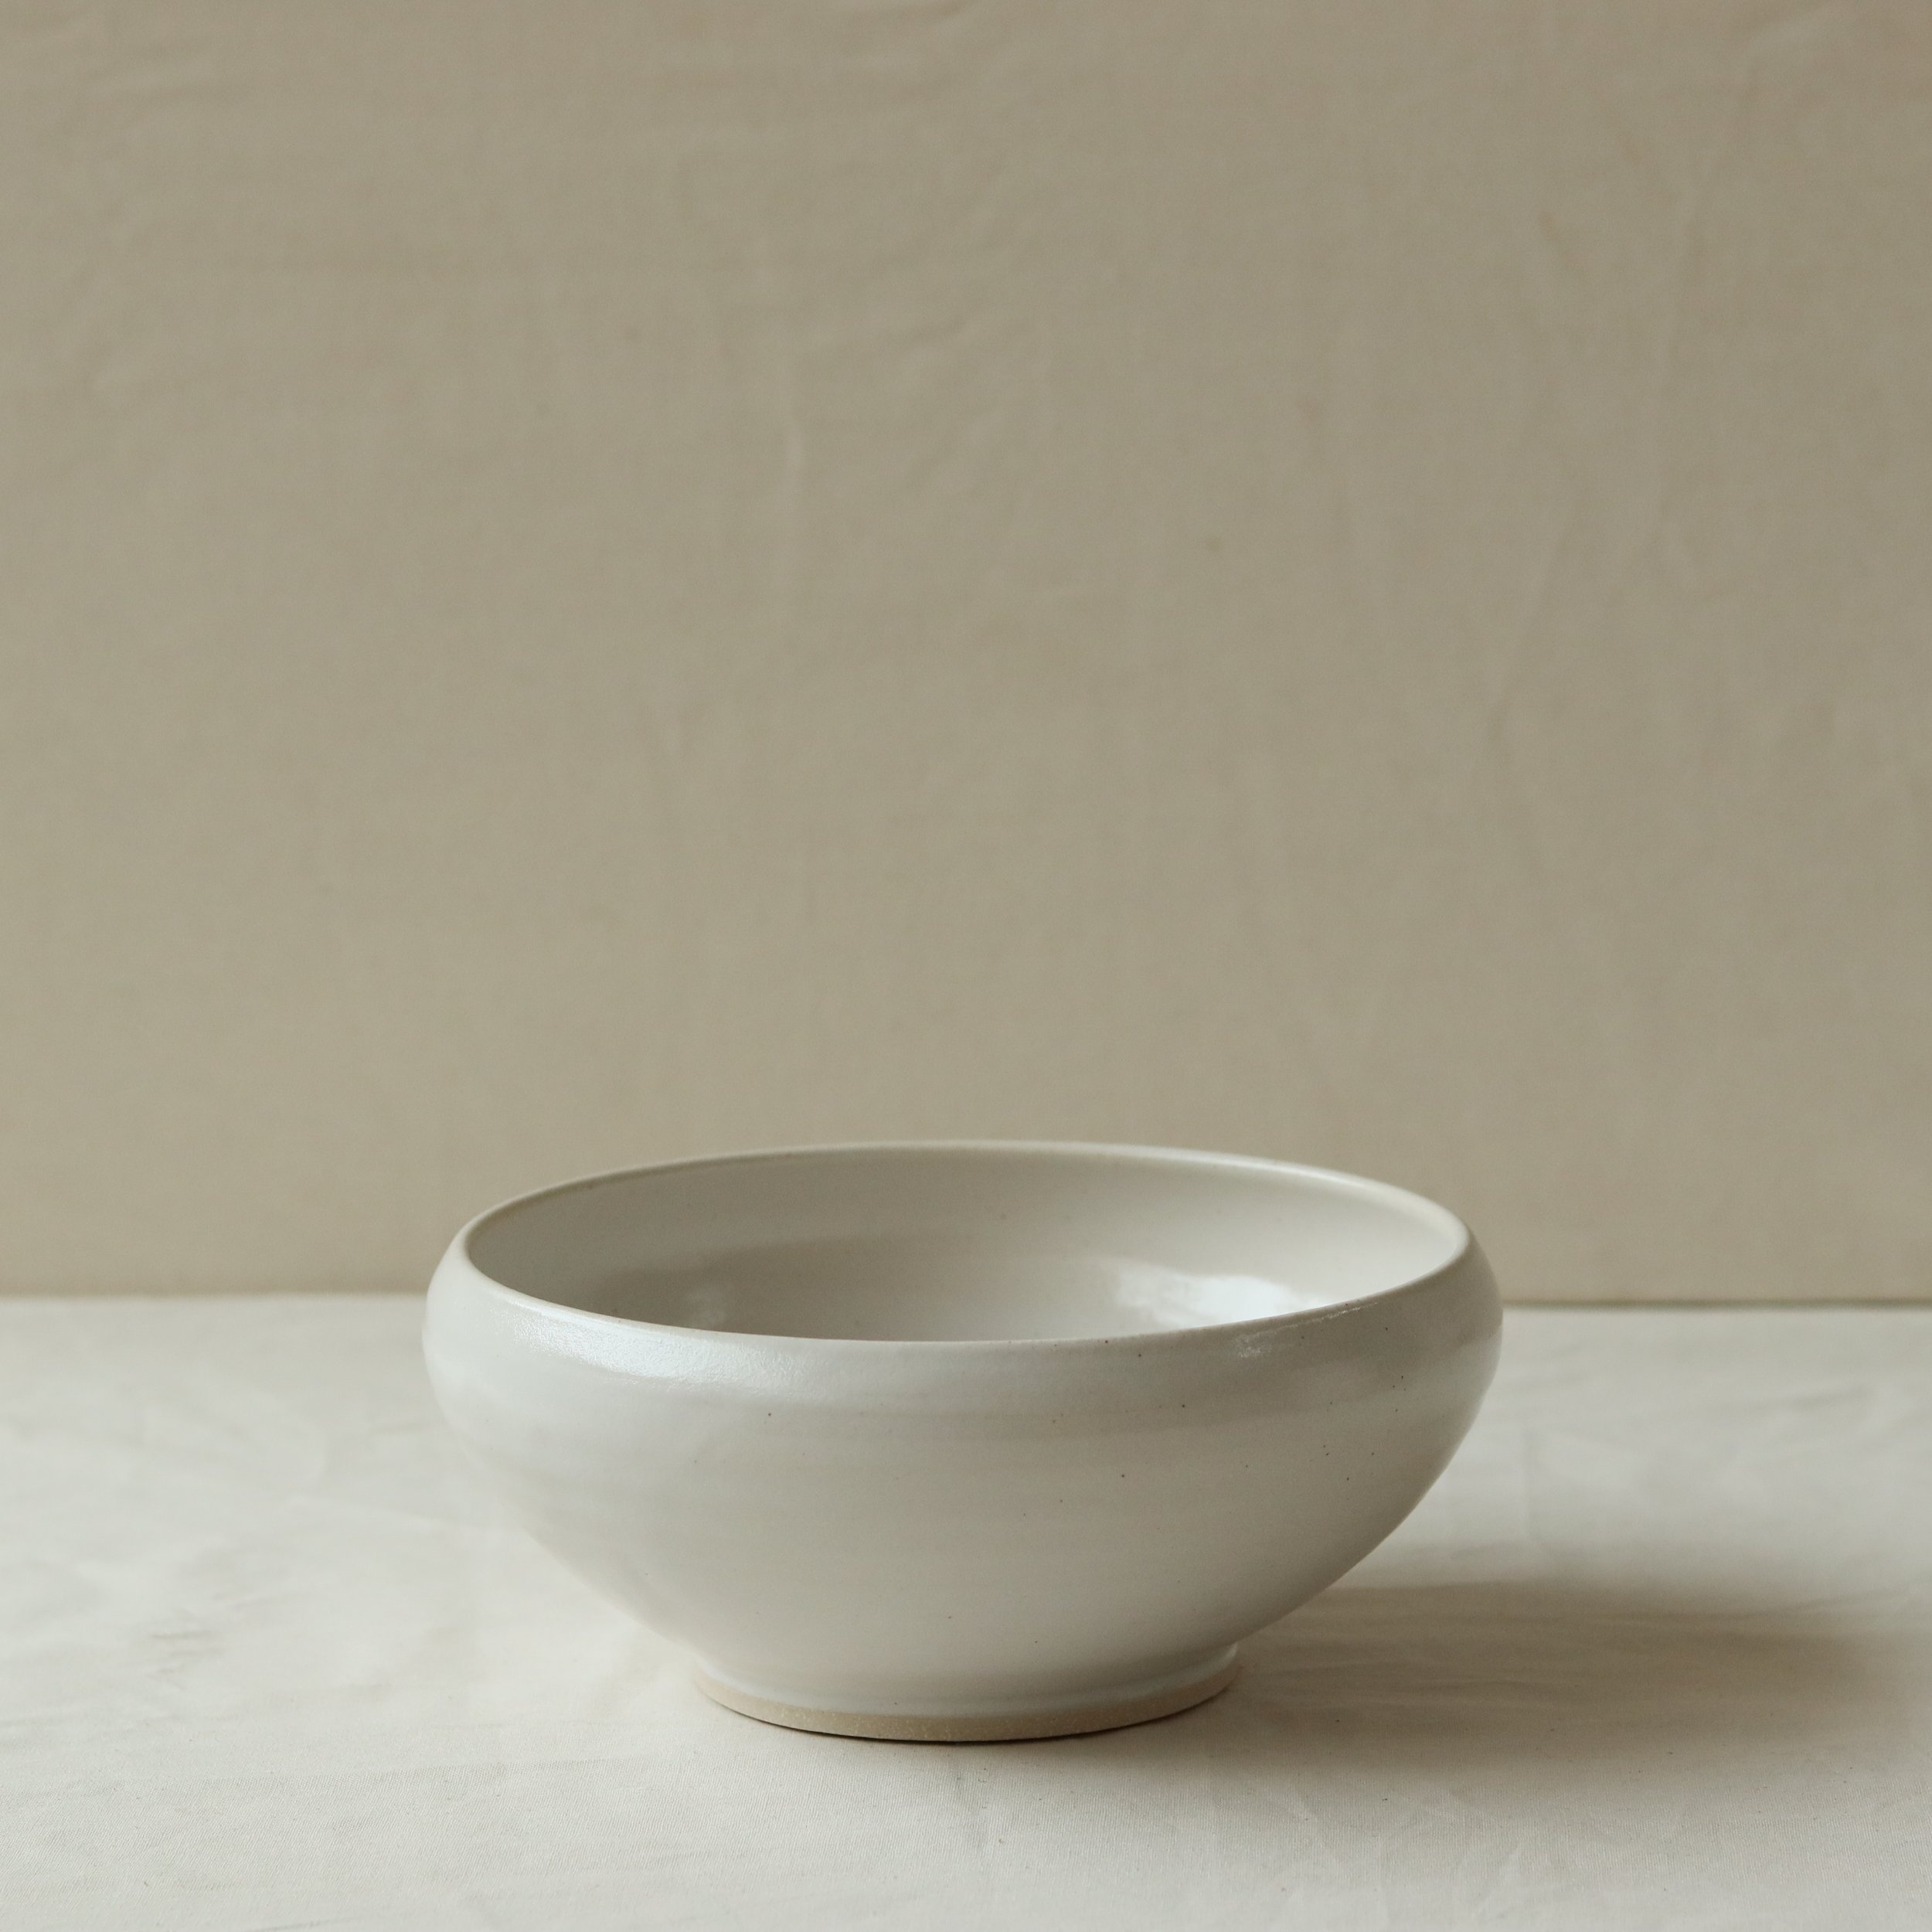 Ramen Bowl in Speckled White, Pale Stoneware-6.jpg